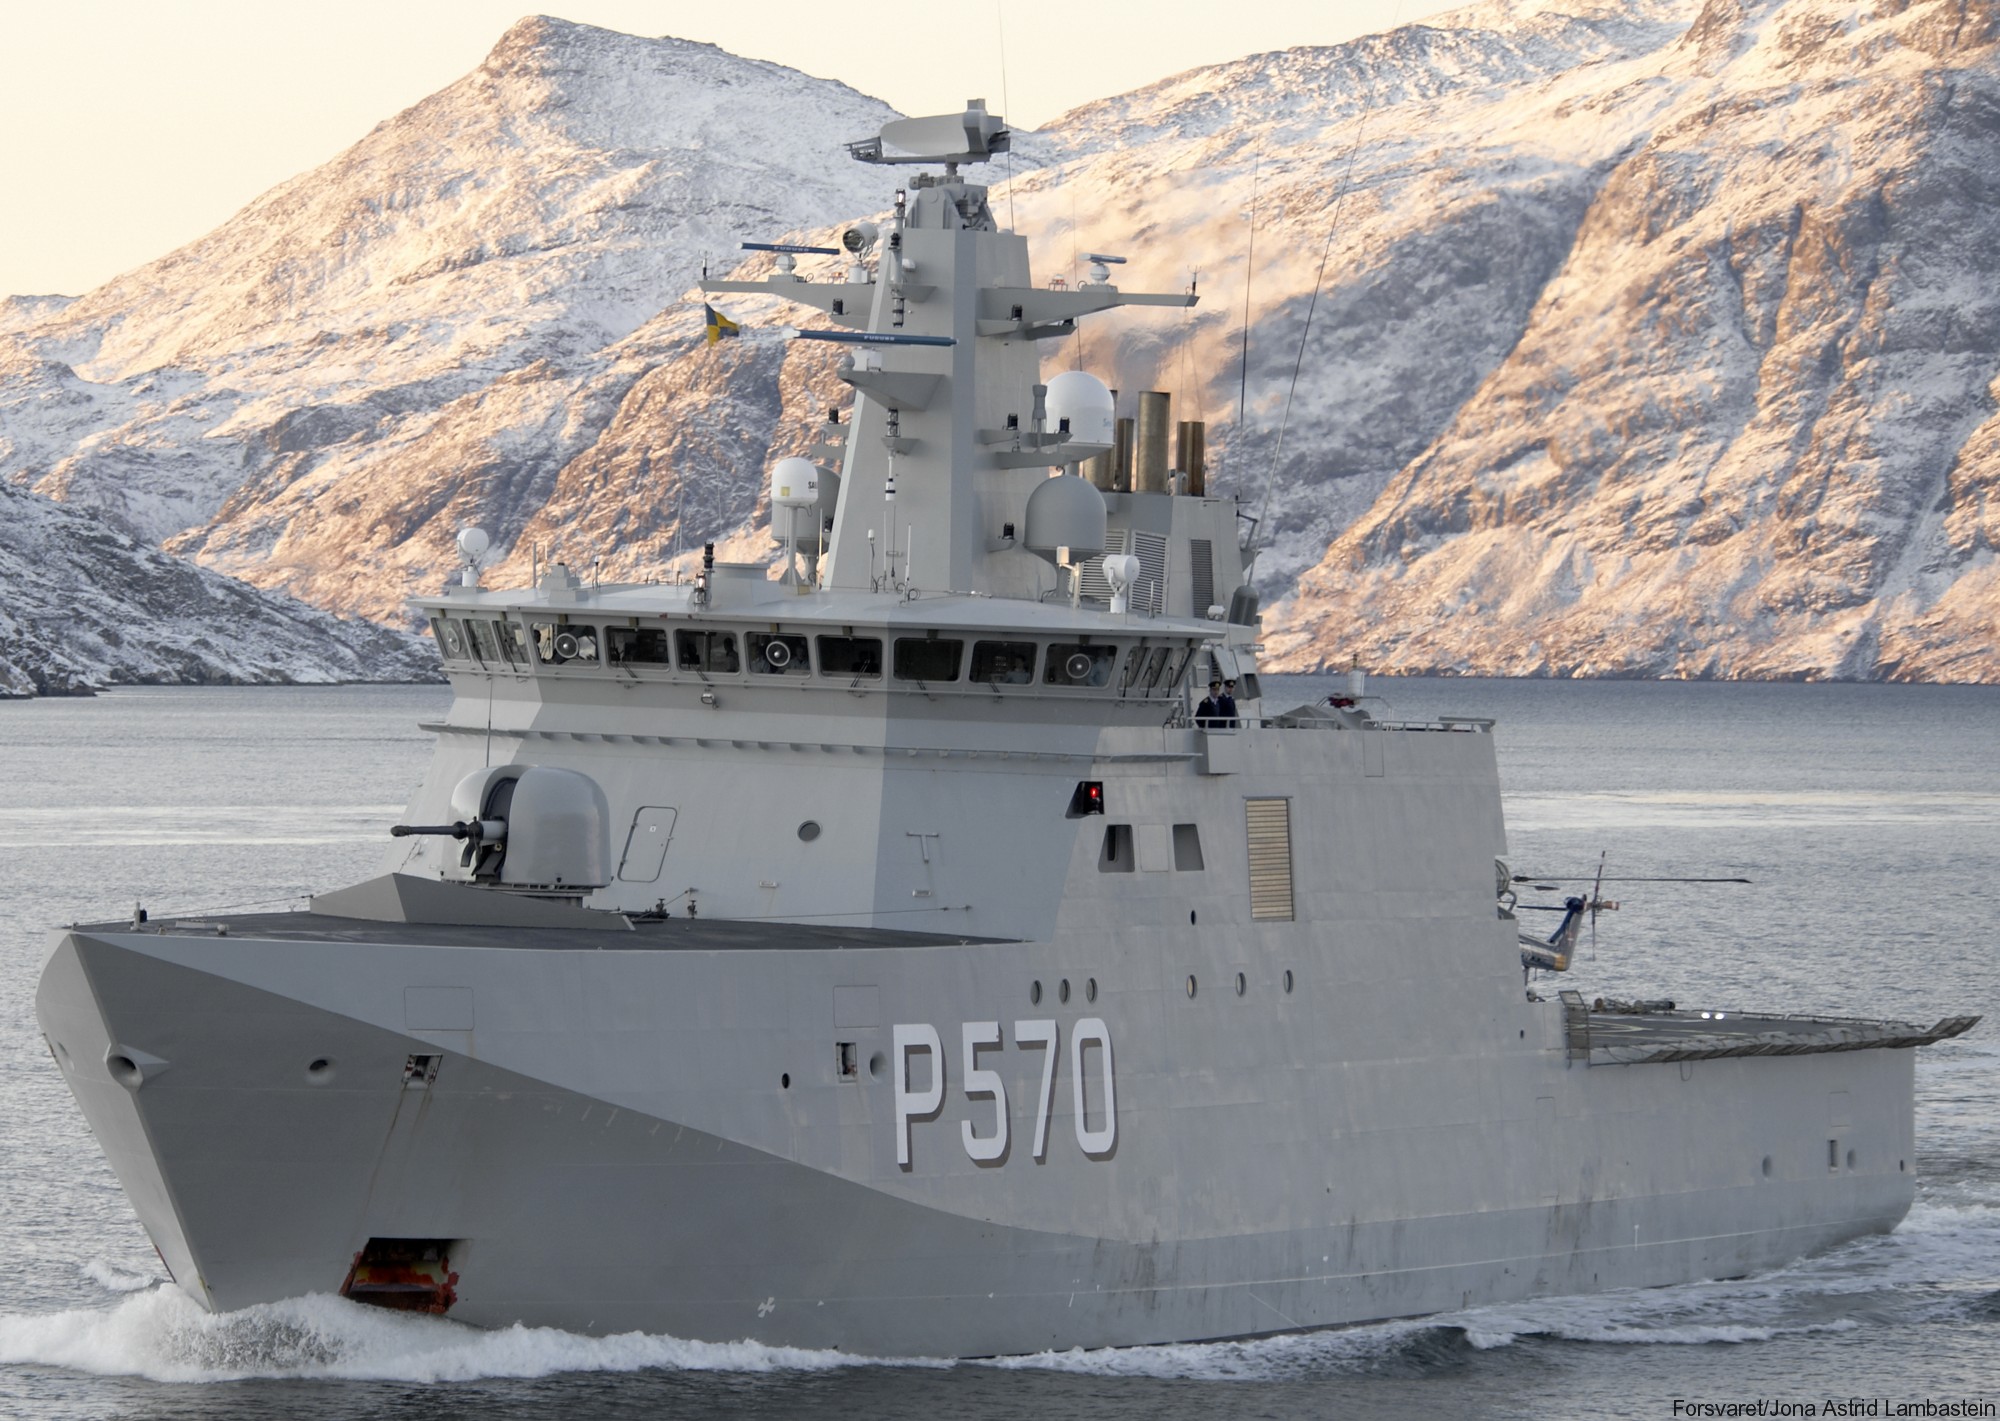 p-570 hdms knud rasmussen class offshore patrol vessel royal danish navy inspektionsfartøj 17